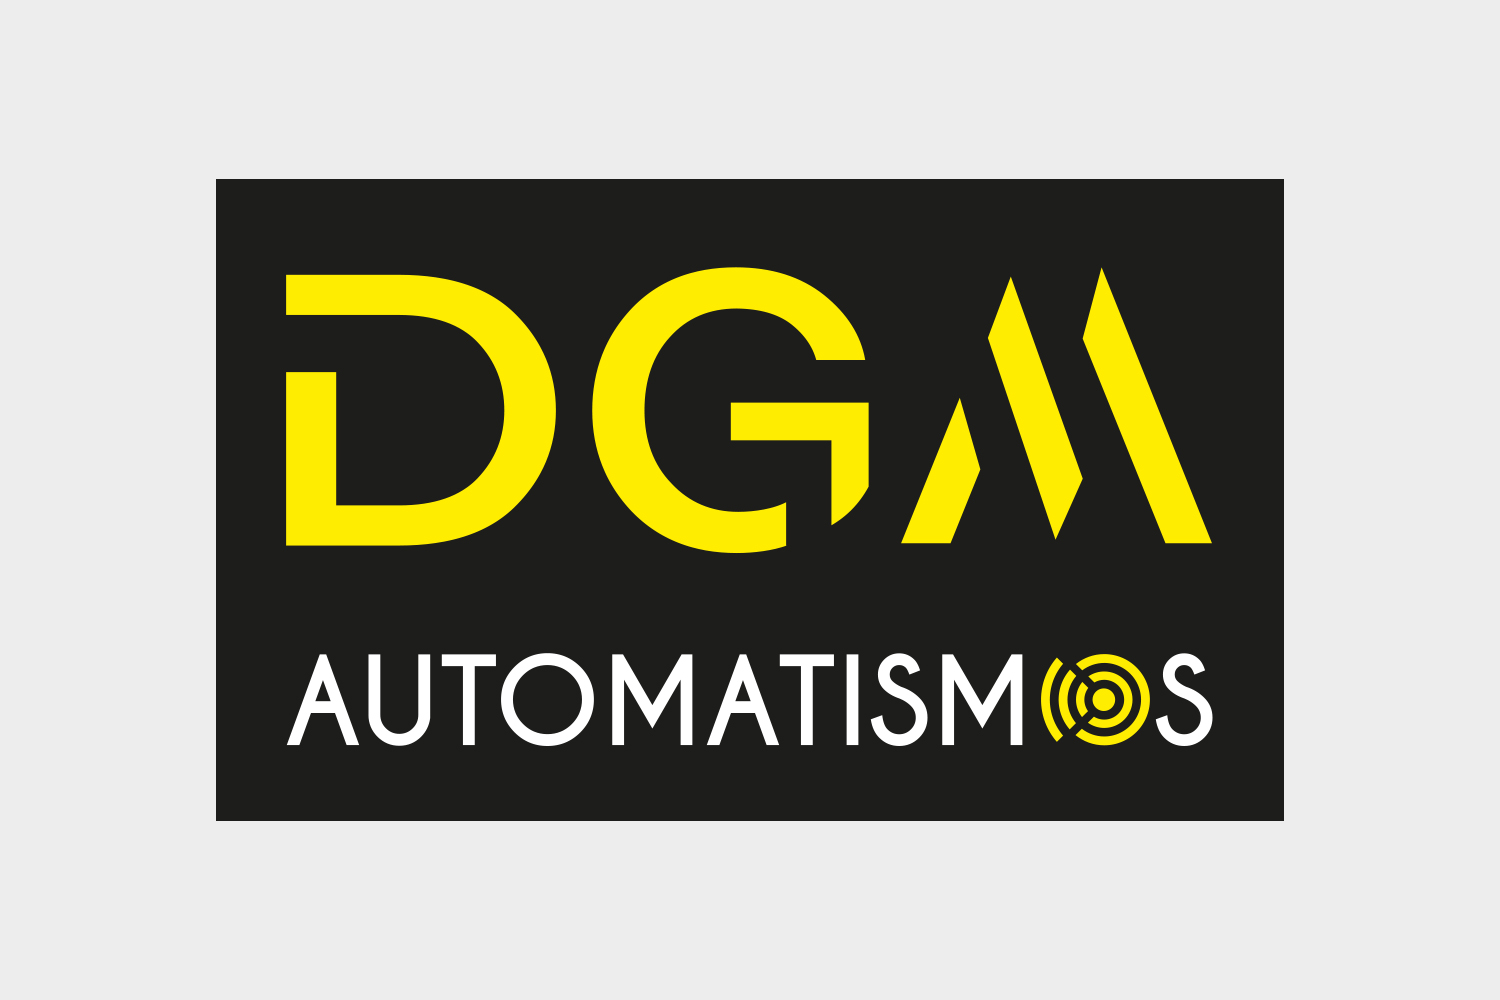 logo DGM